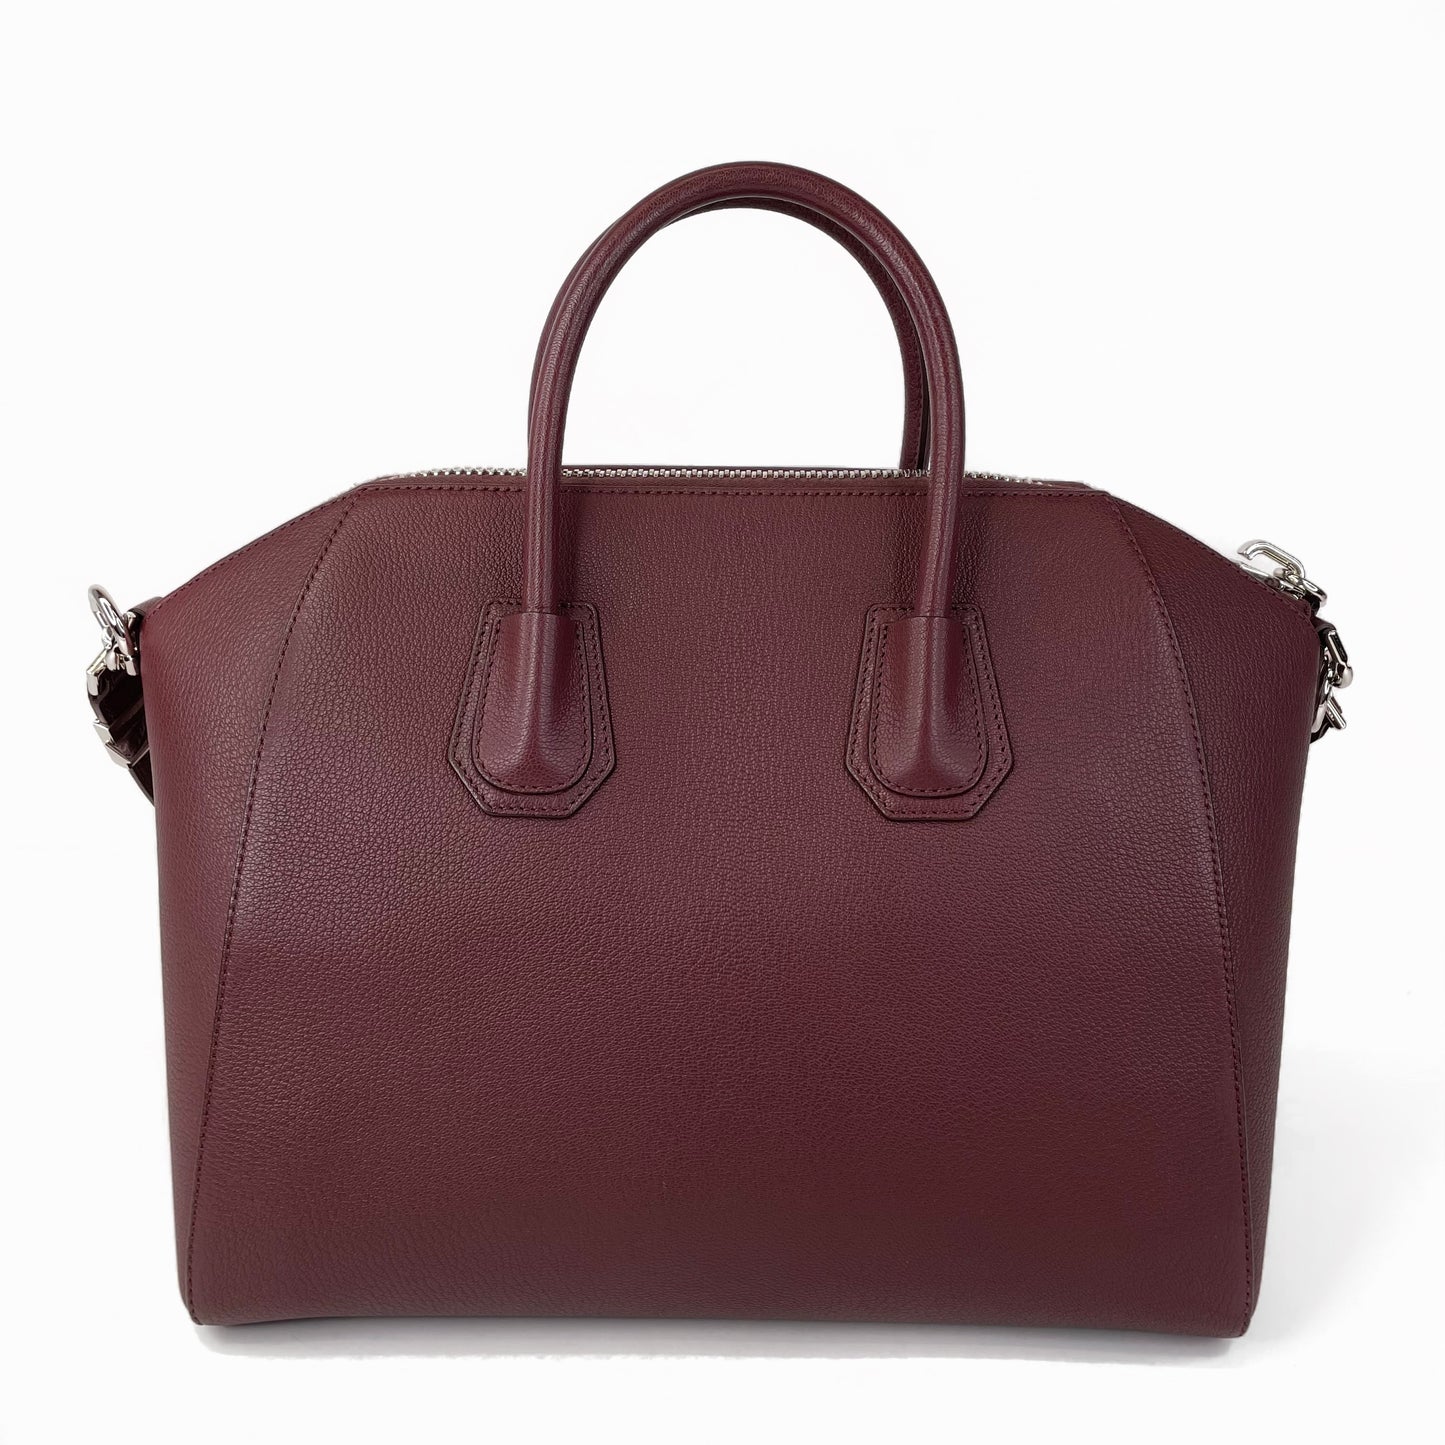 Givenchy Antigona Oxblood Medium Bag